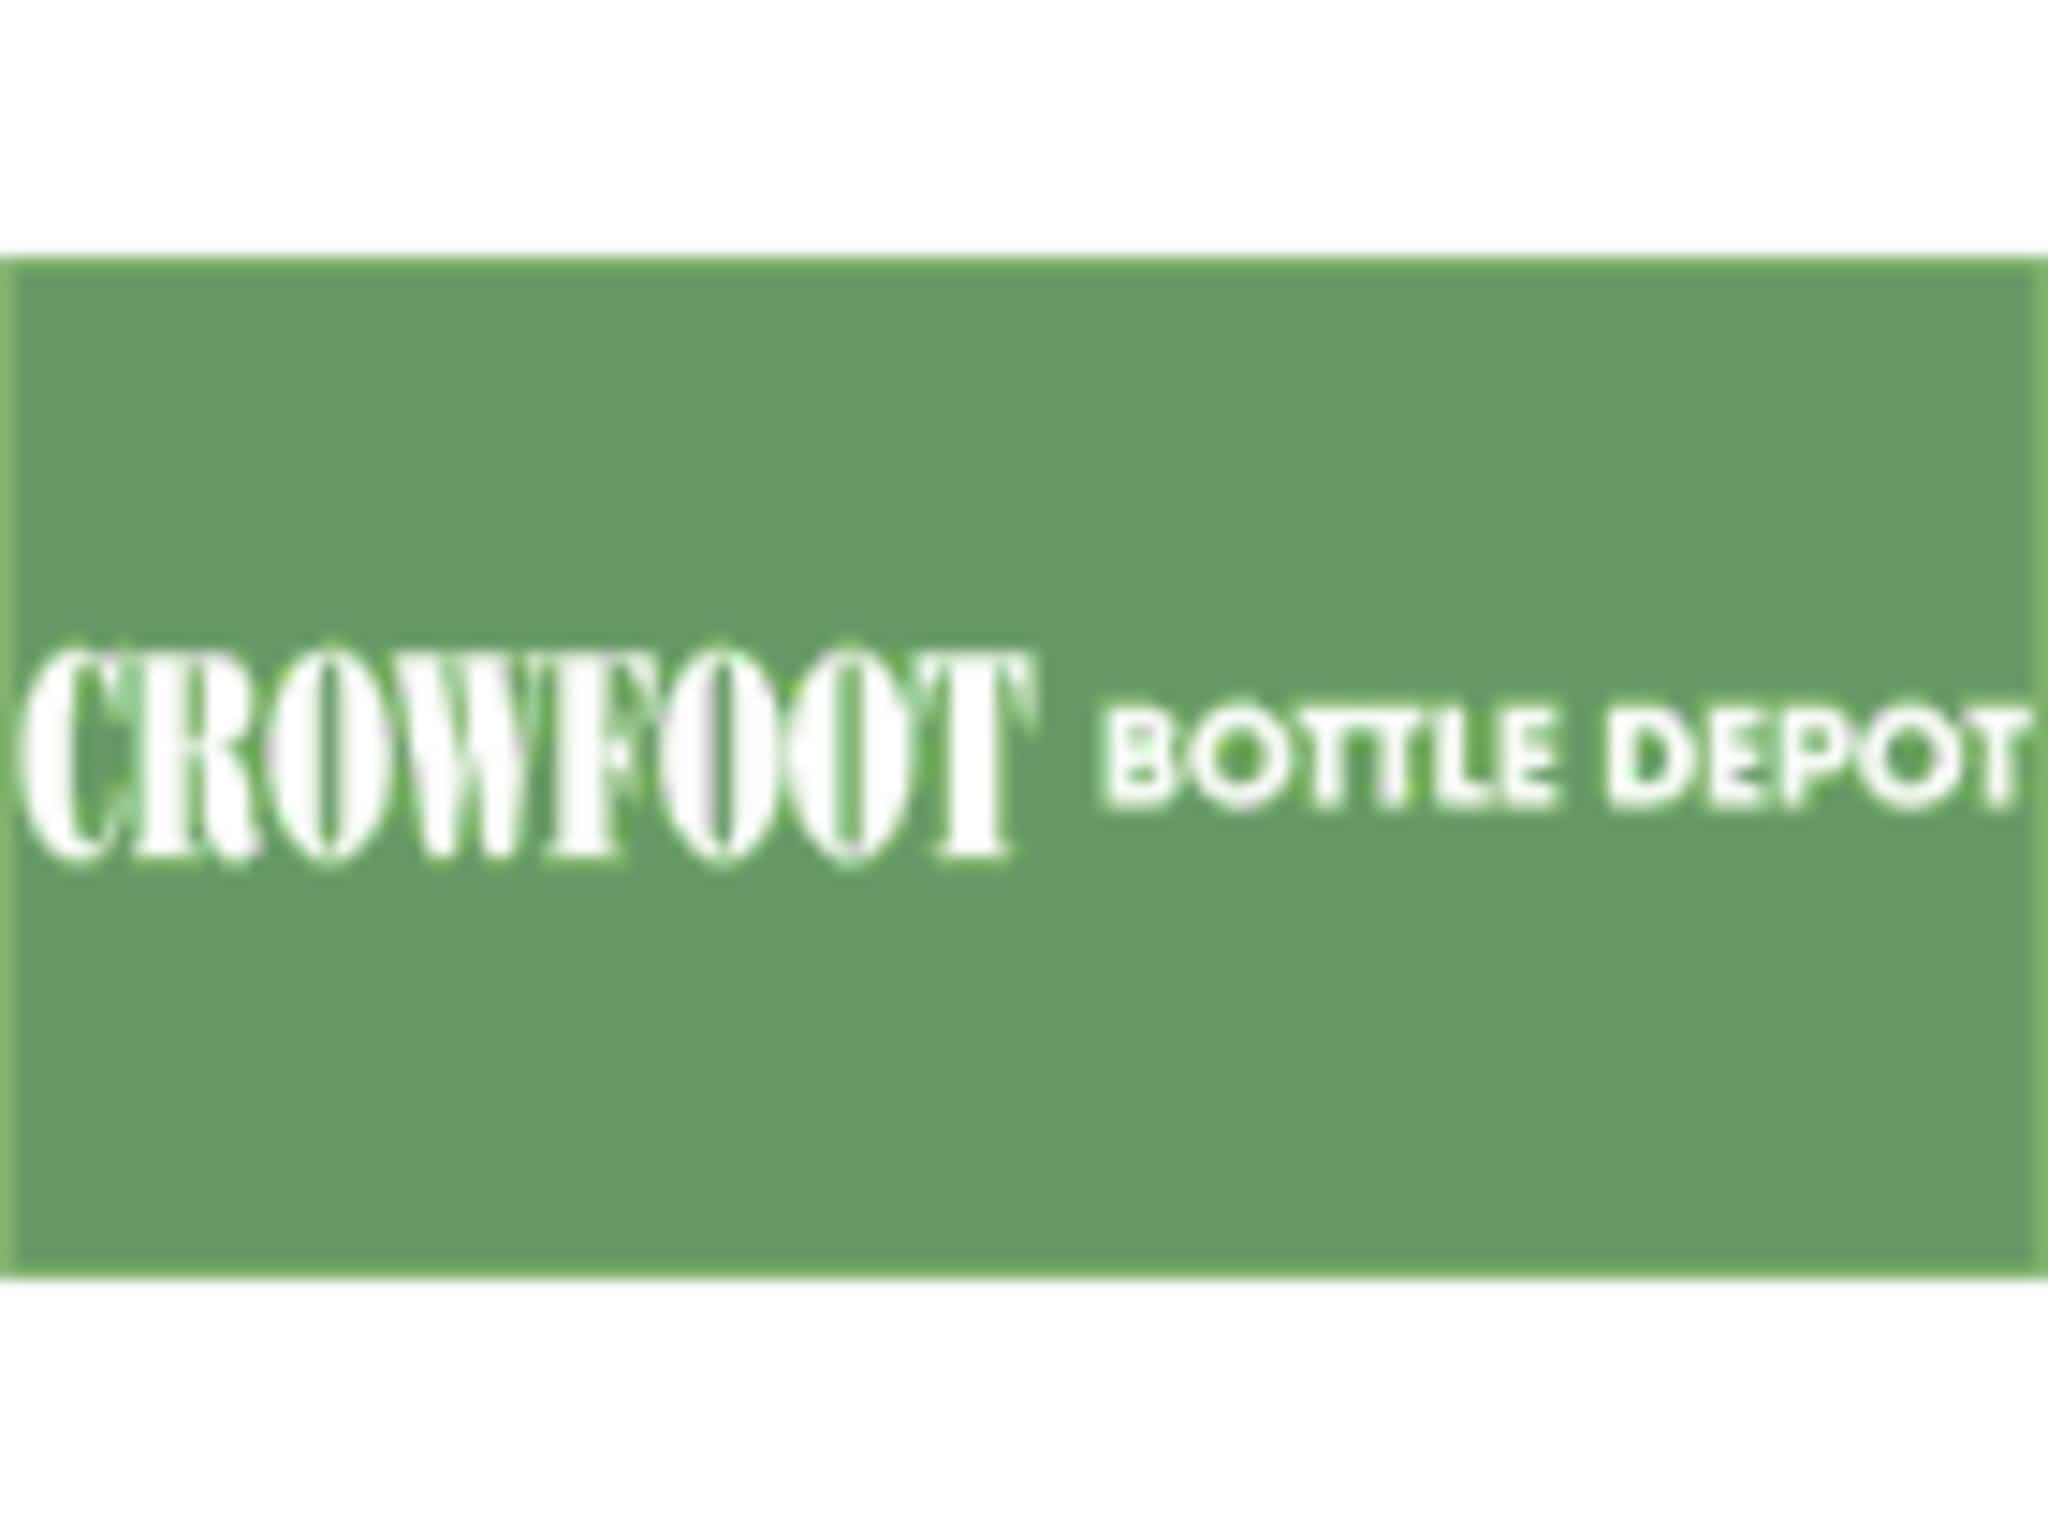 photo Crowfoot Bottle Depot